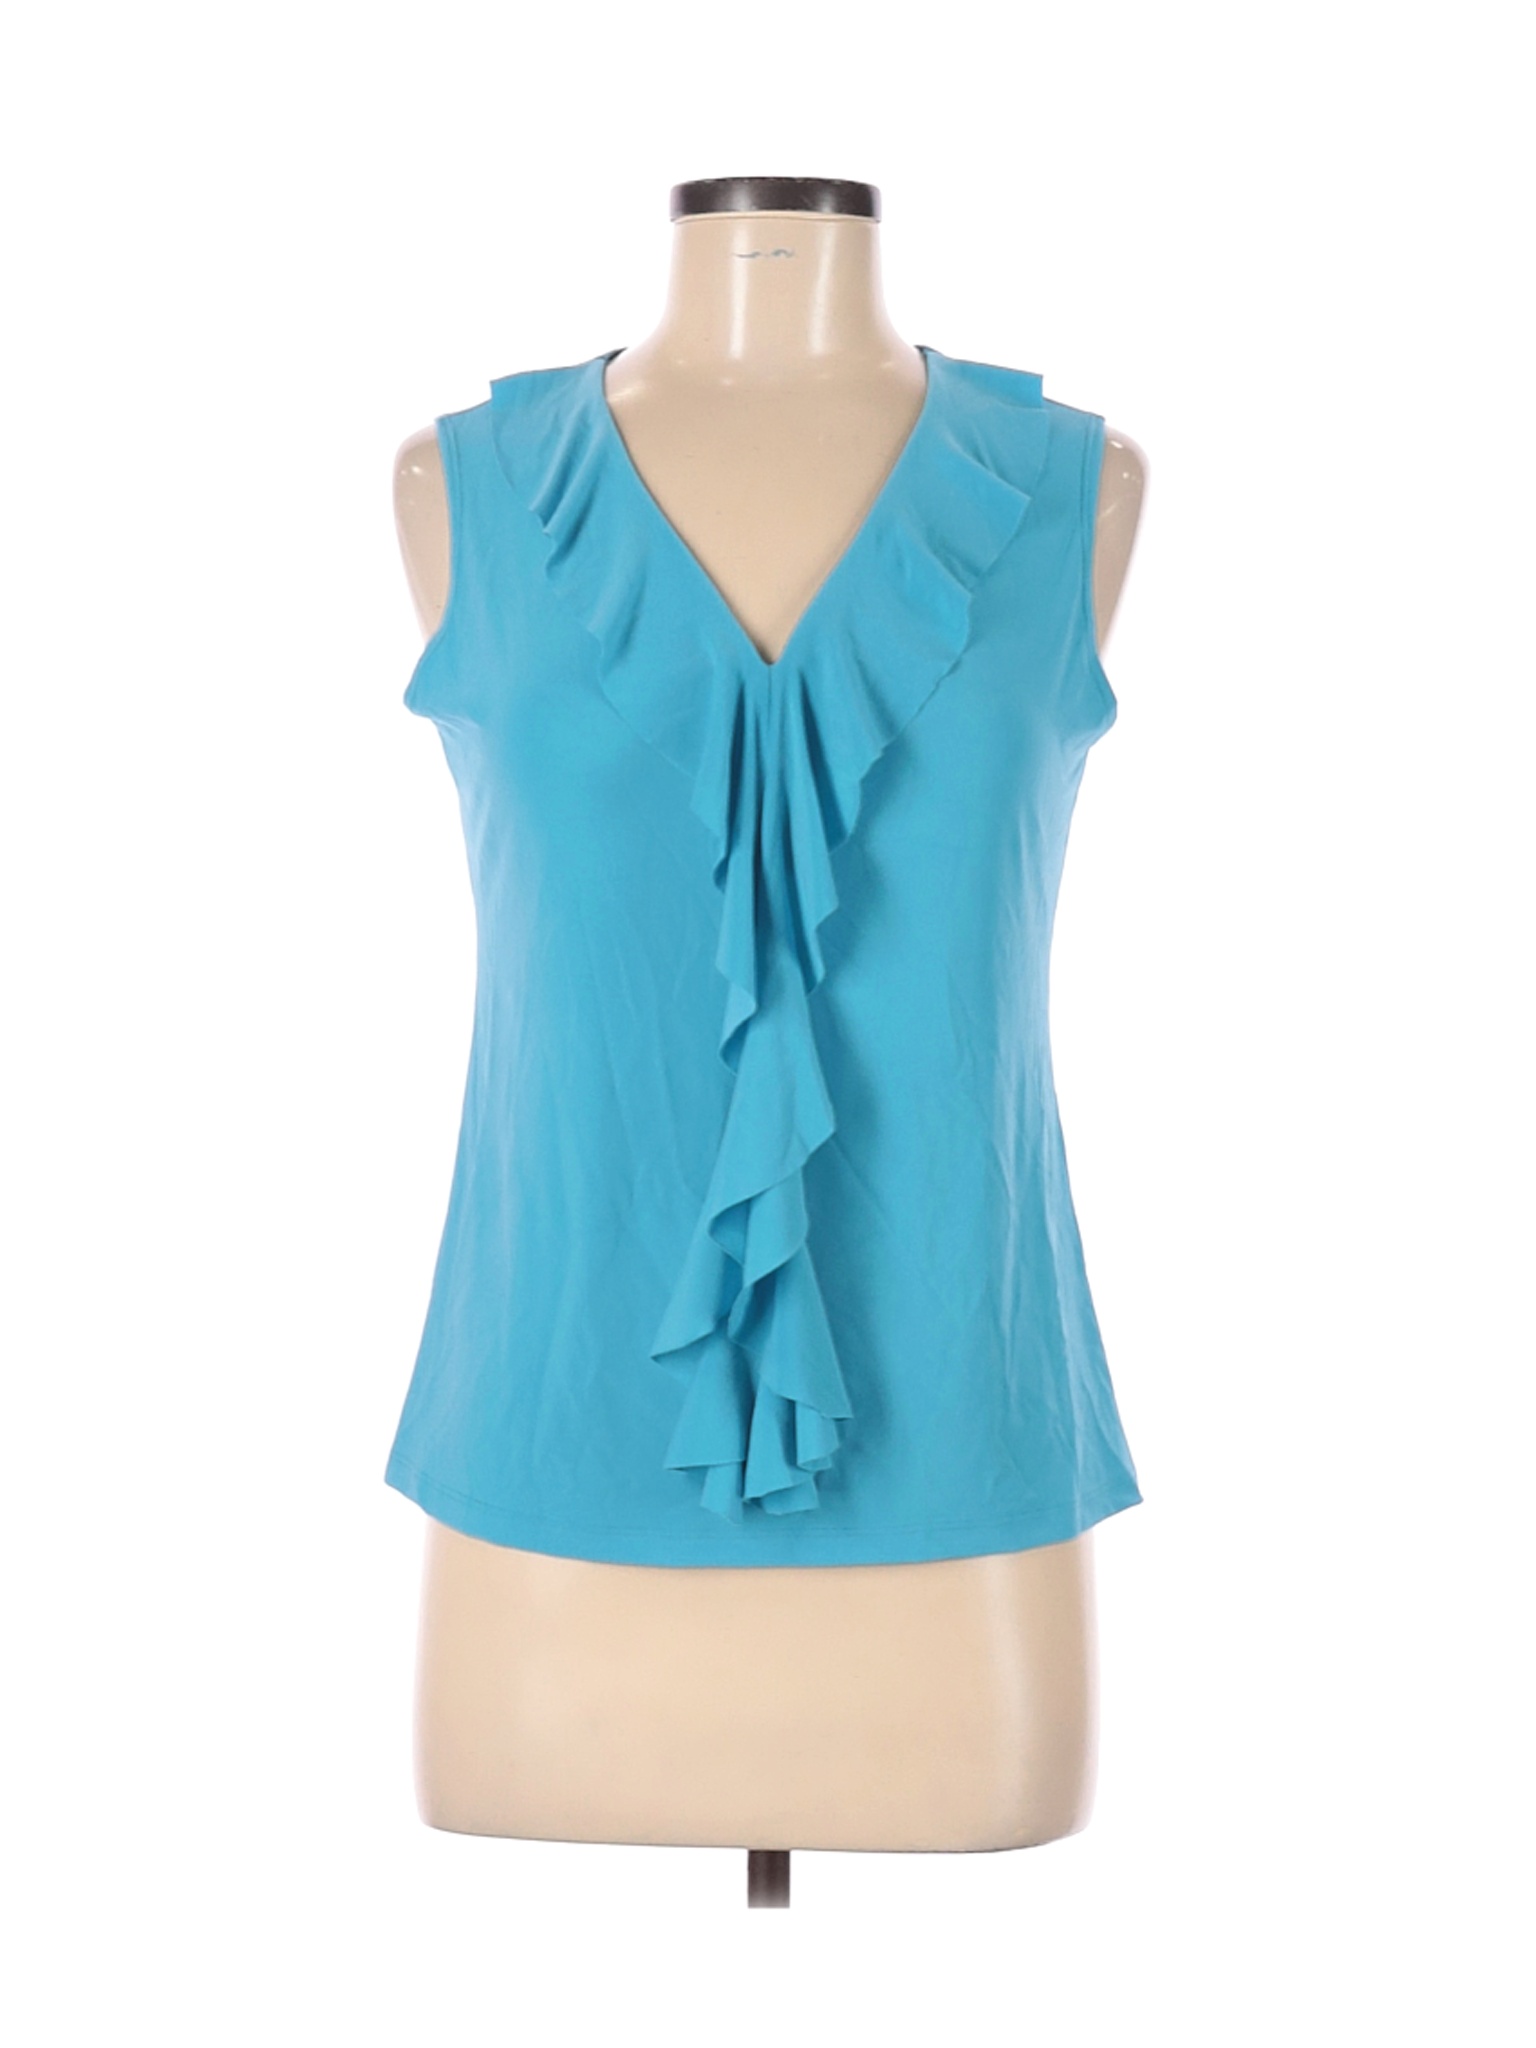 Soft Works Women Blue Sleeveless Top M | eBay